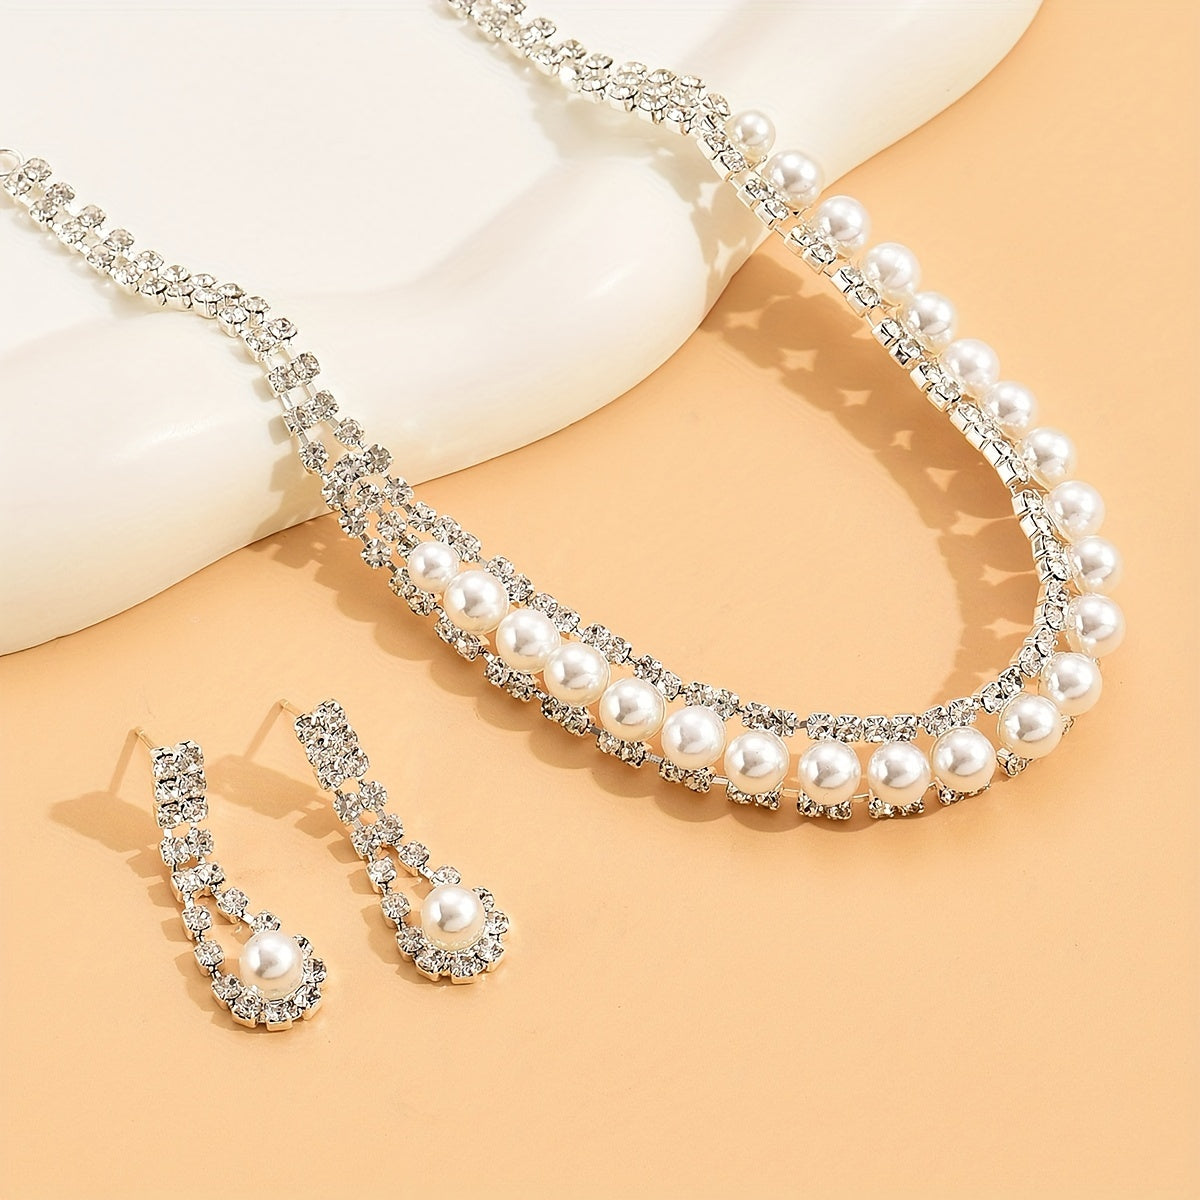 Baroque Style Faux Pearl Rhinestone Choker & Earrings Fine Jewelry Set, Silver Plated Accessories Ornament